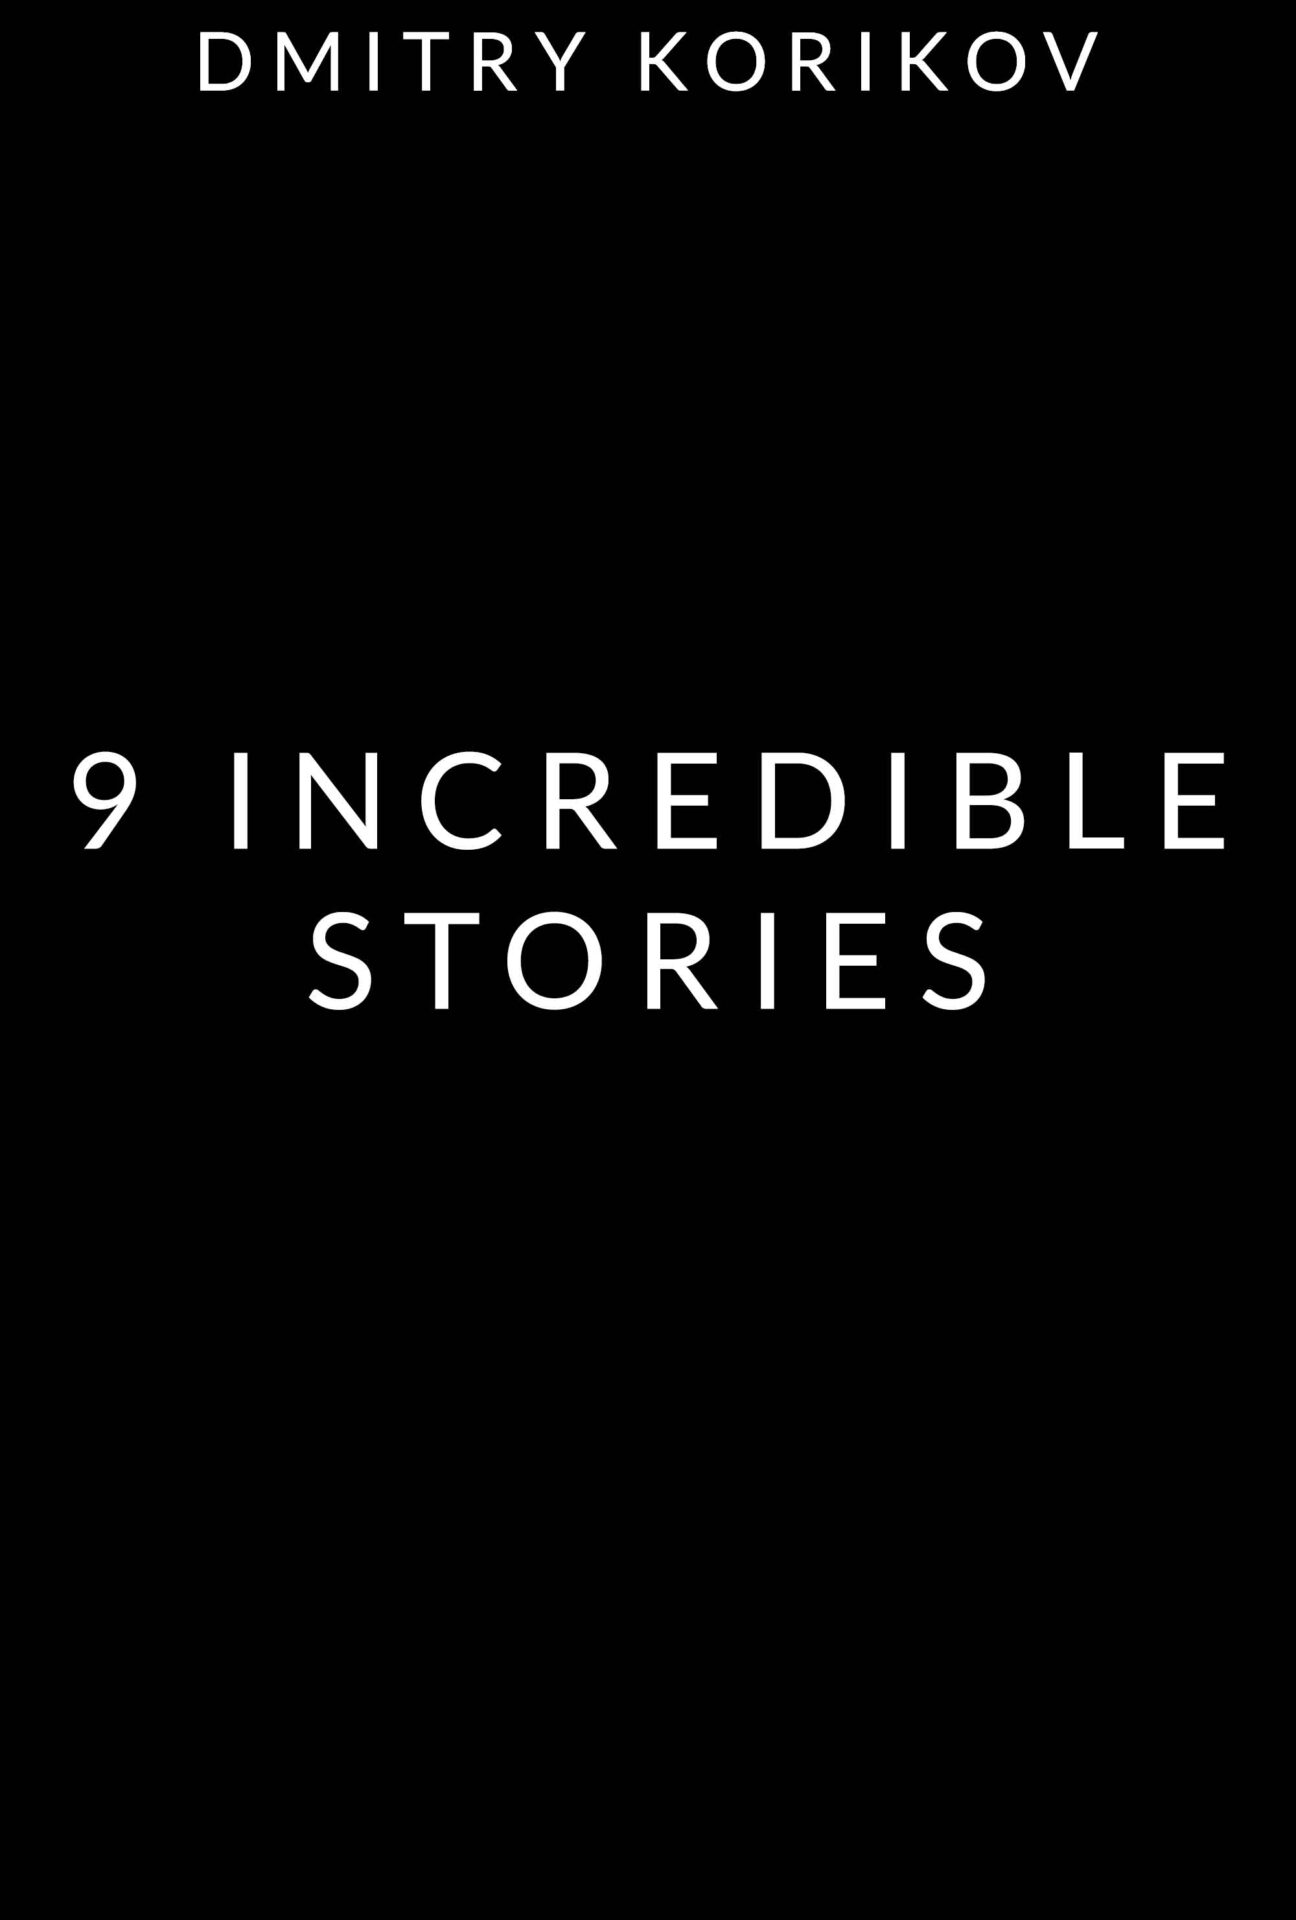 9 Incredible stories